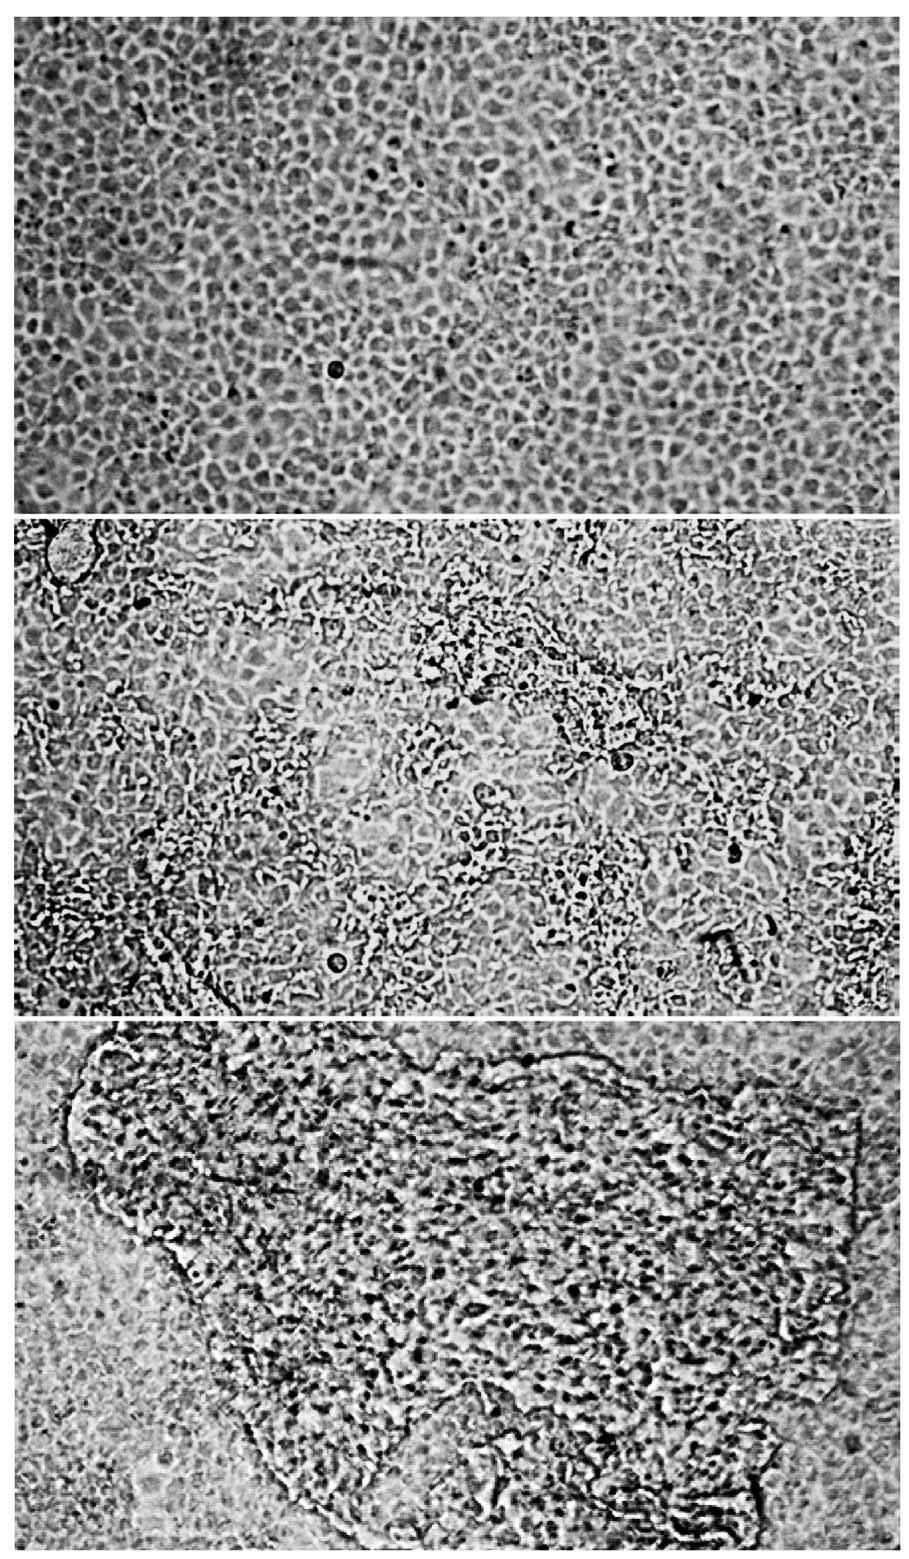 Zhang et al.: LV propagation in fish-culture cells 29 ml 1 Hoechst 33258 for 15 min.